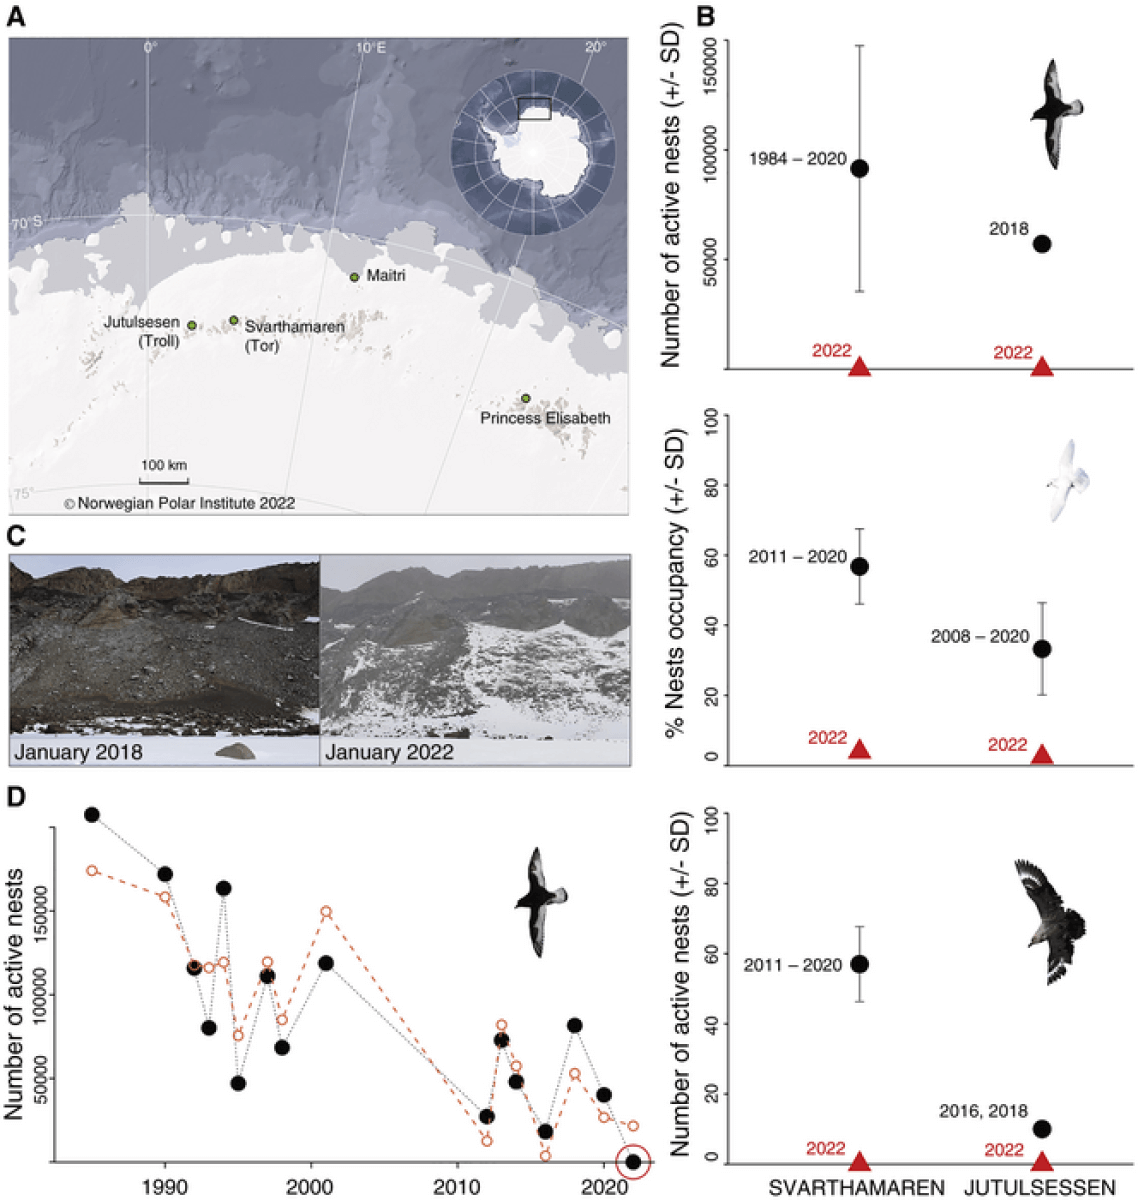 Seabird reproduction chart in Antarctica